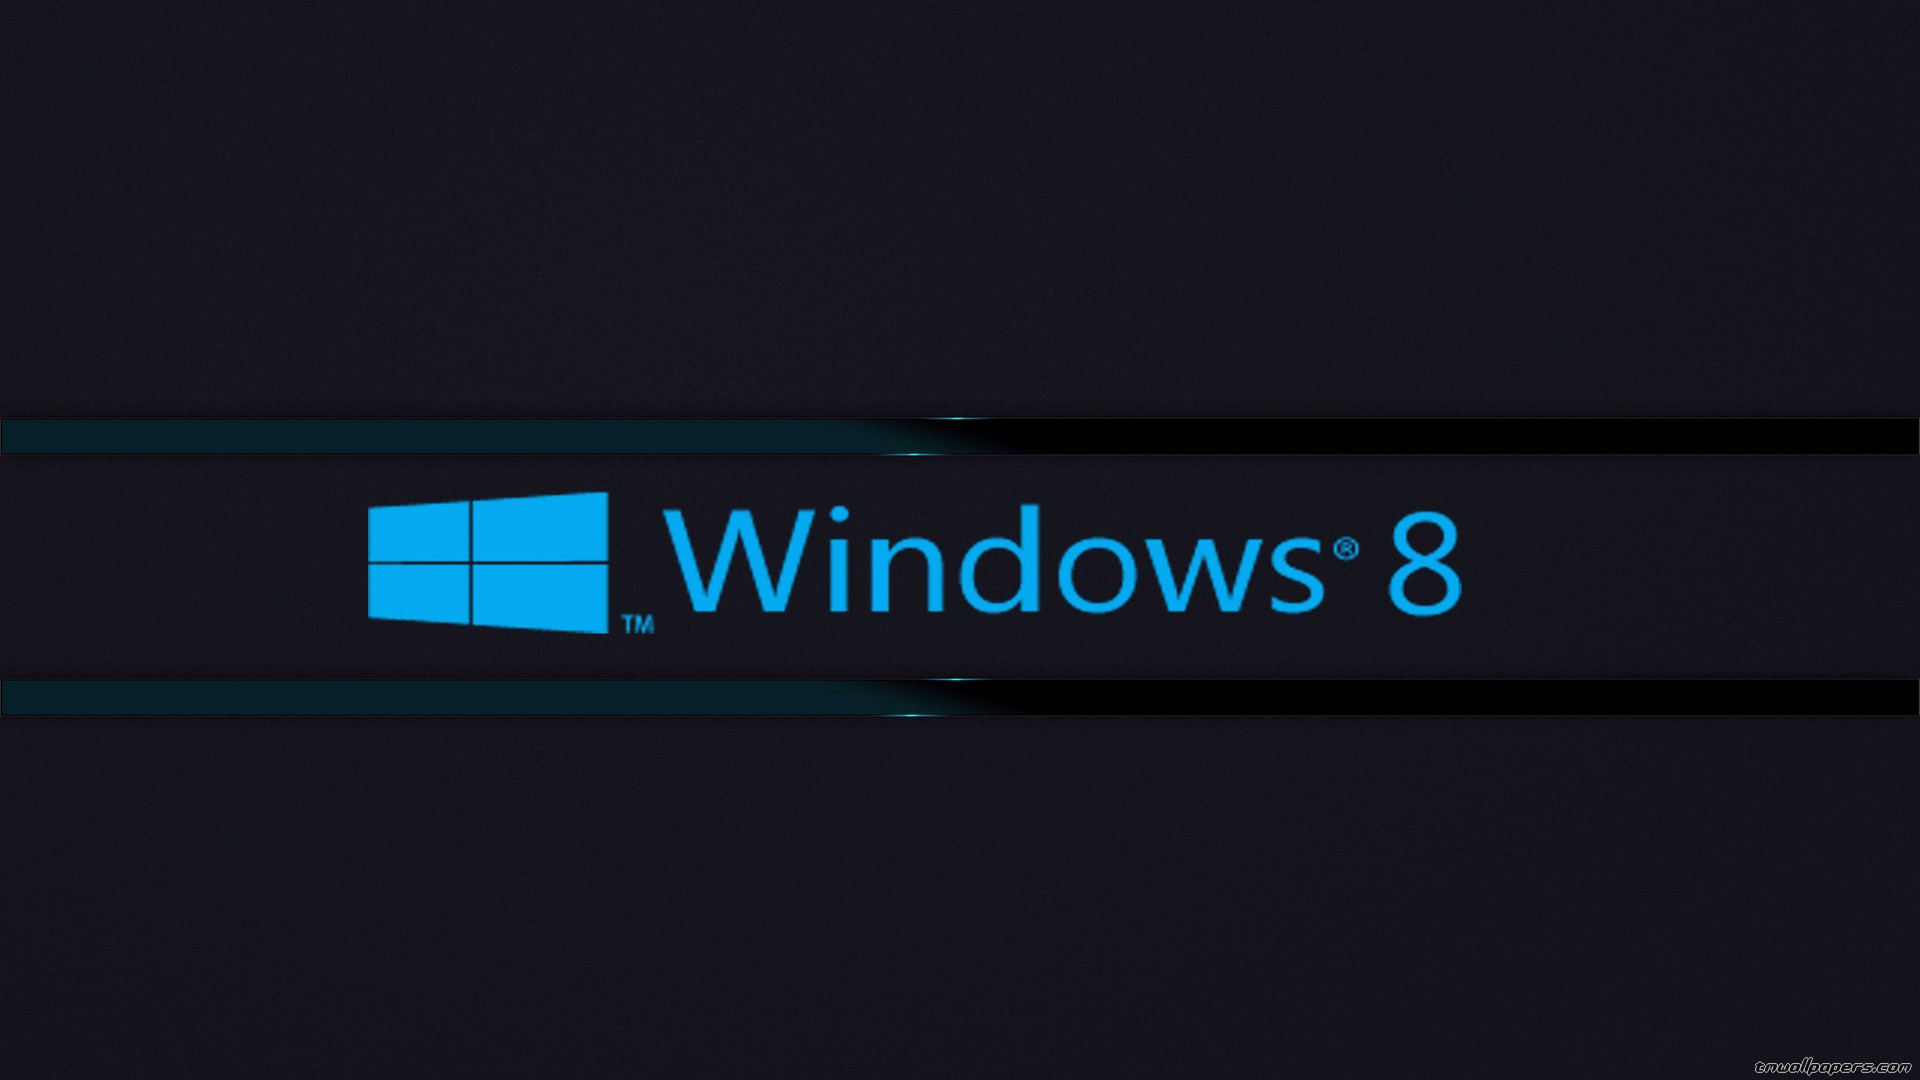 Windows 8 1920x1080 Wallpaper - WallpaperSafari